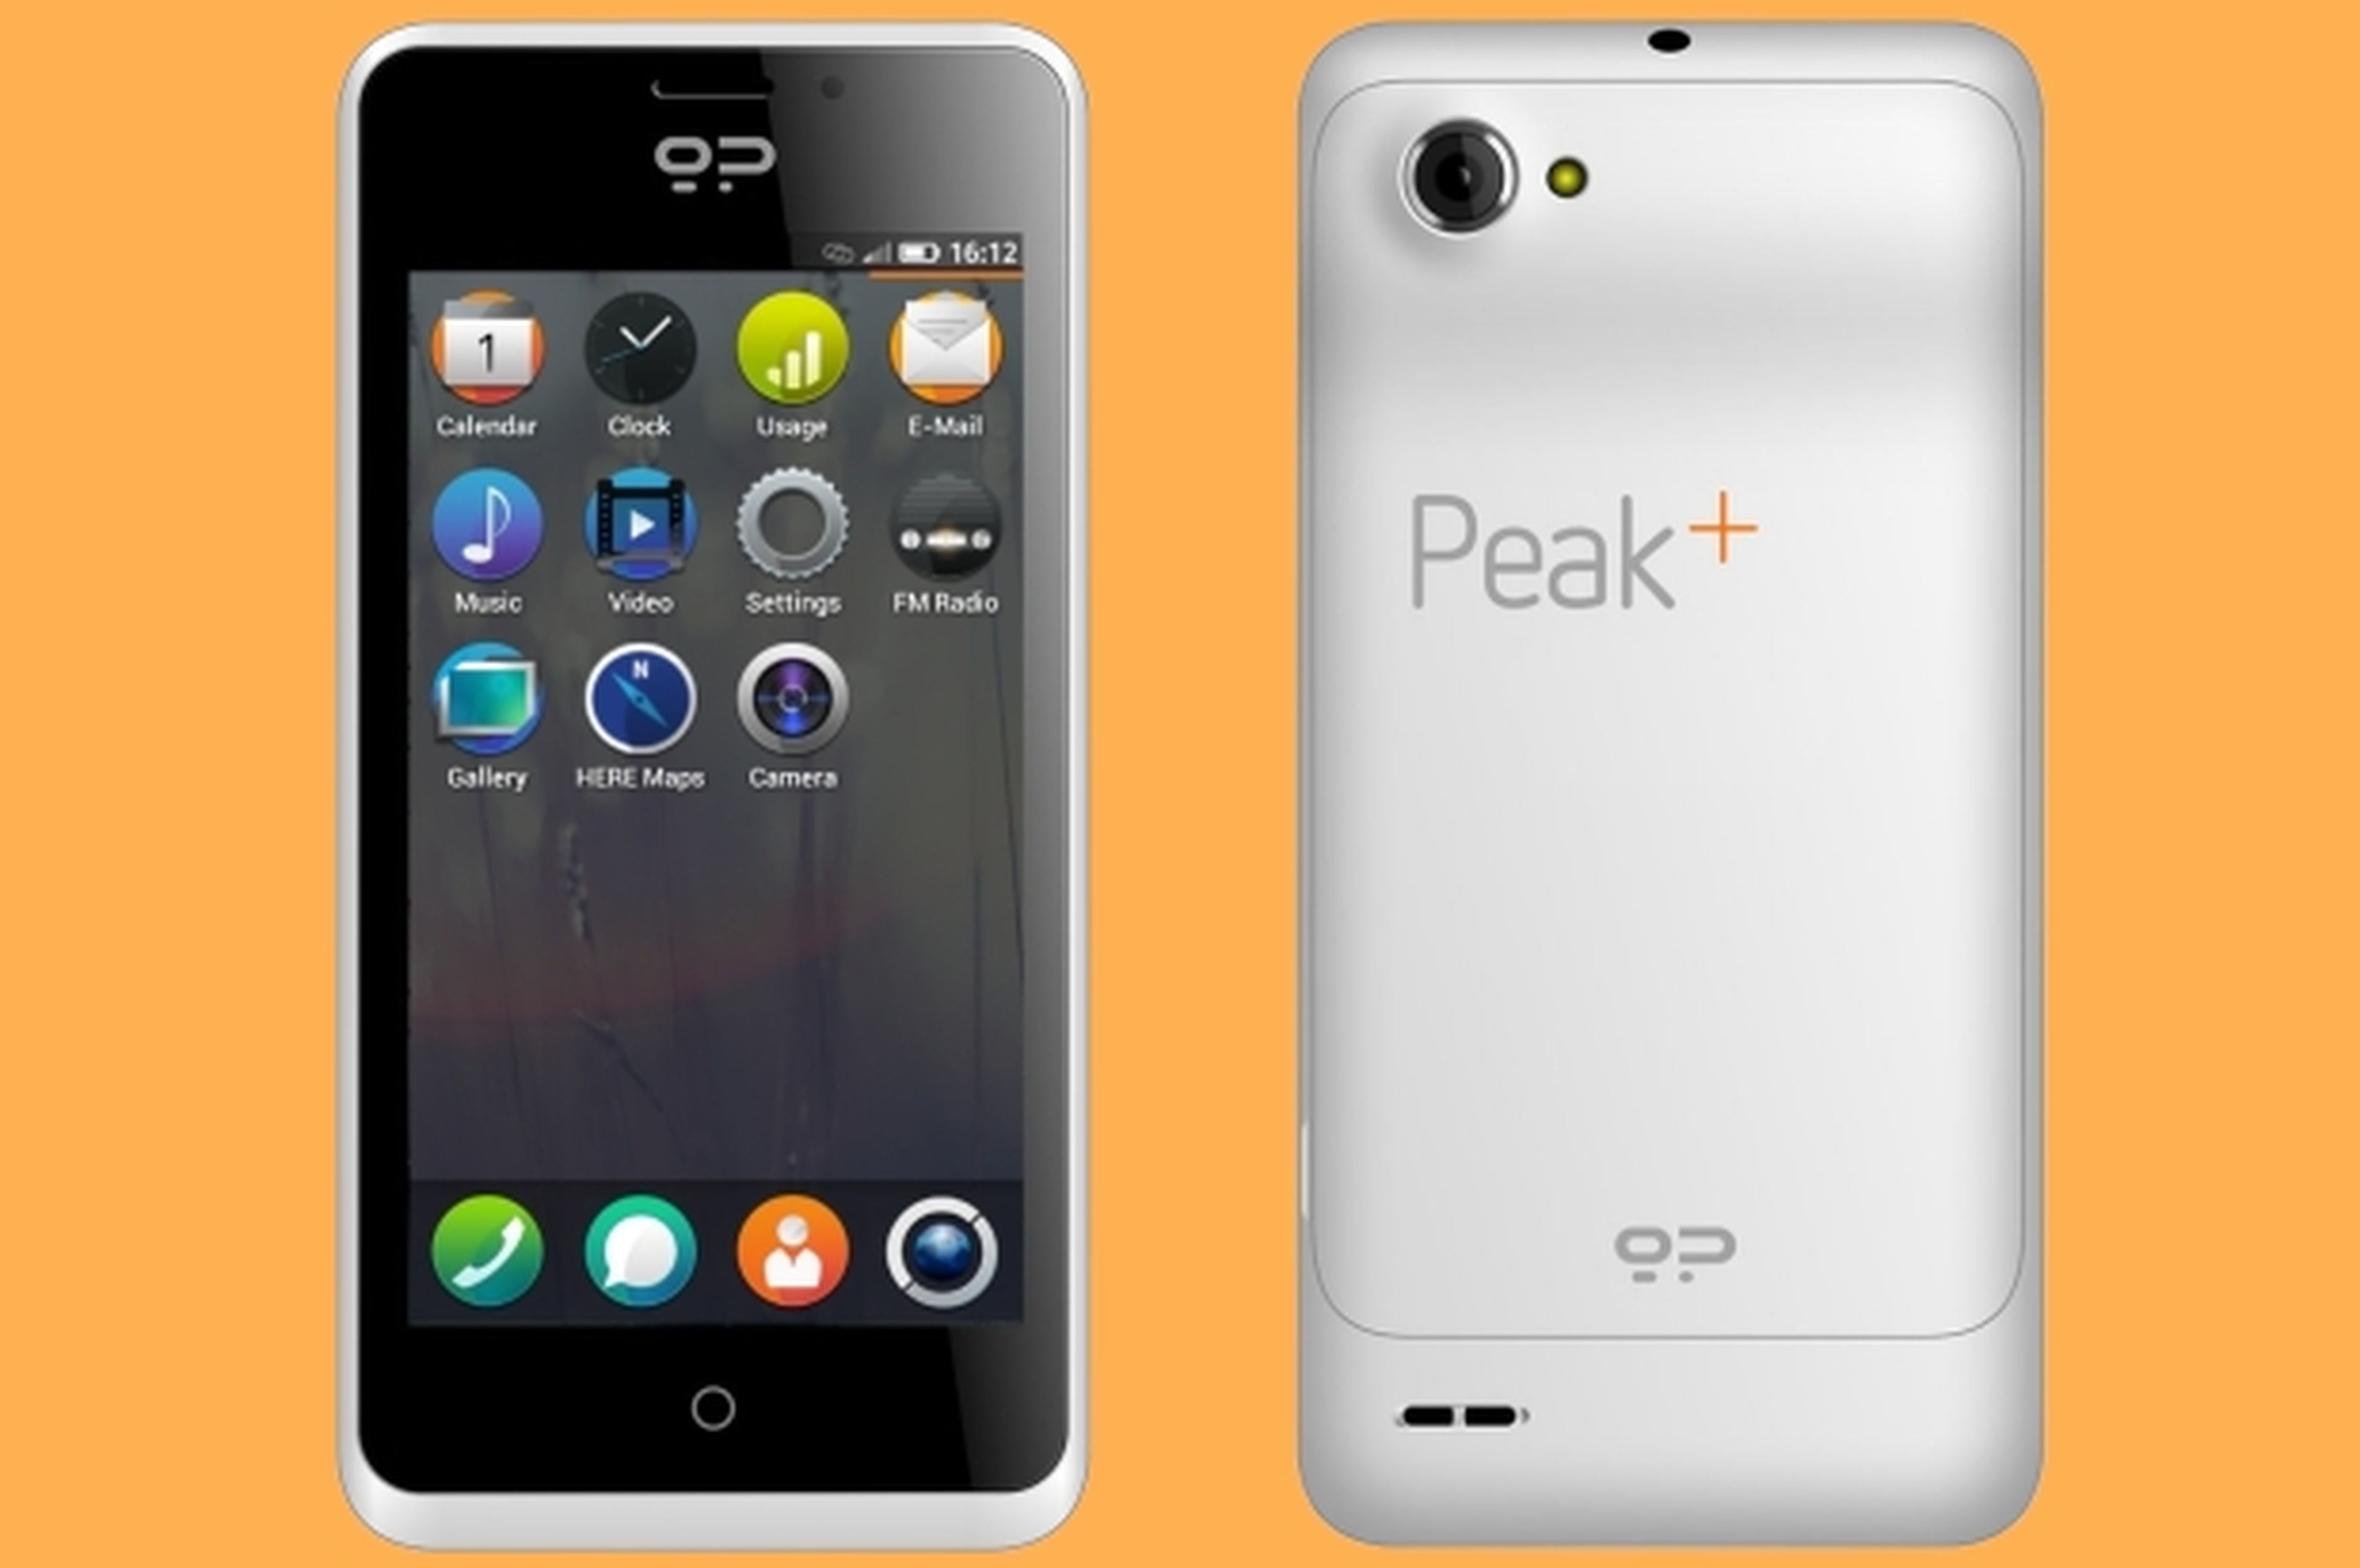 Geeksphone Peak+, smartphone con Firefoz OS 1.1